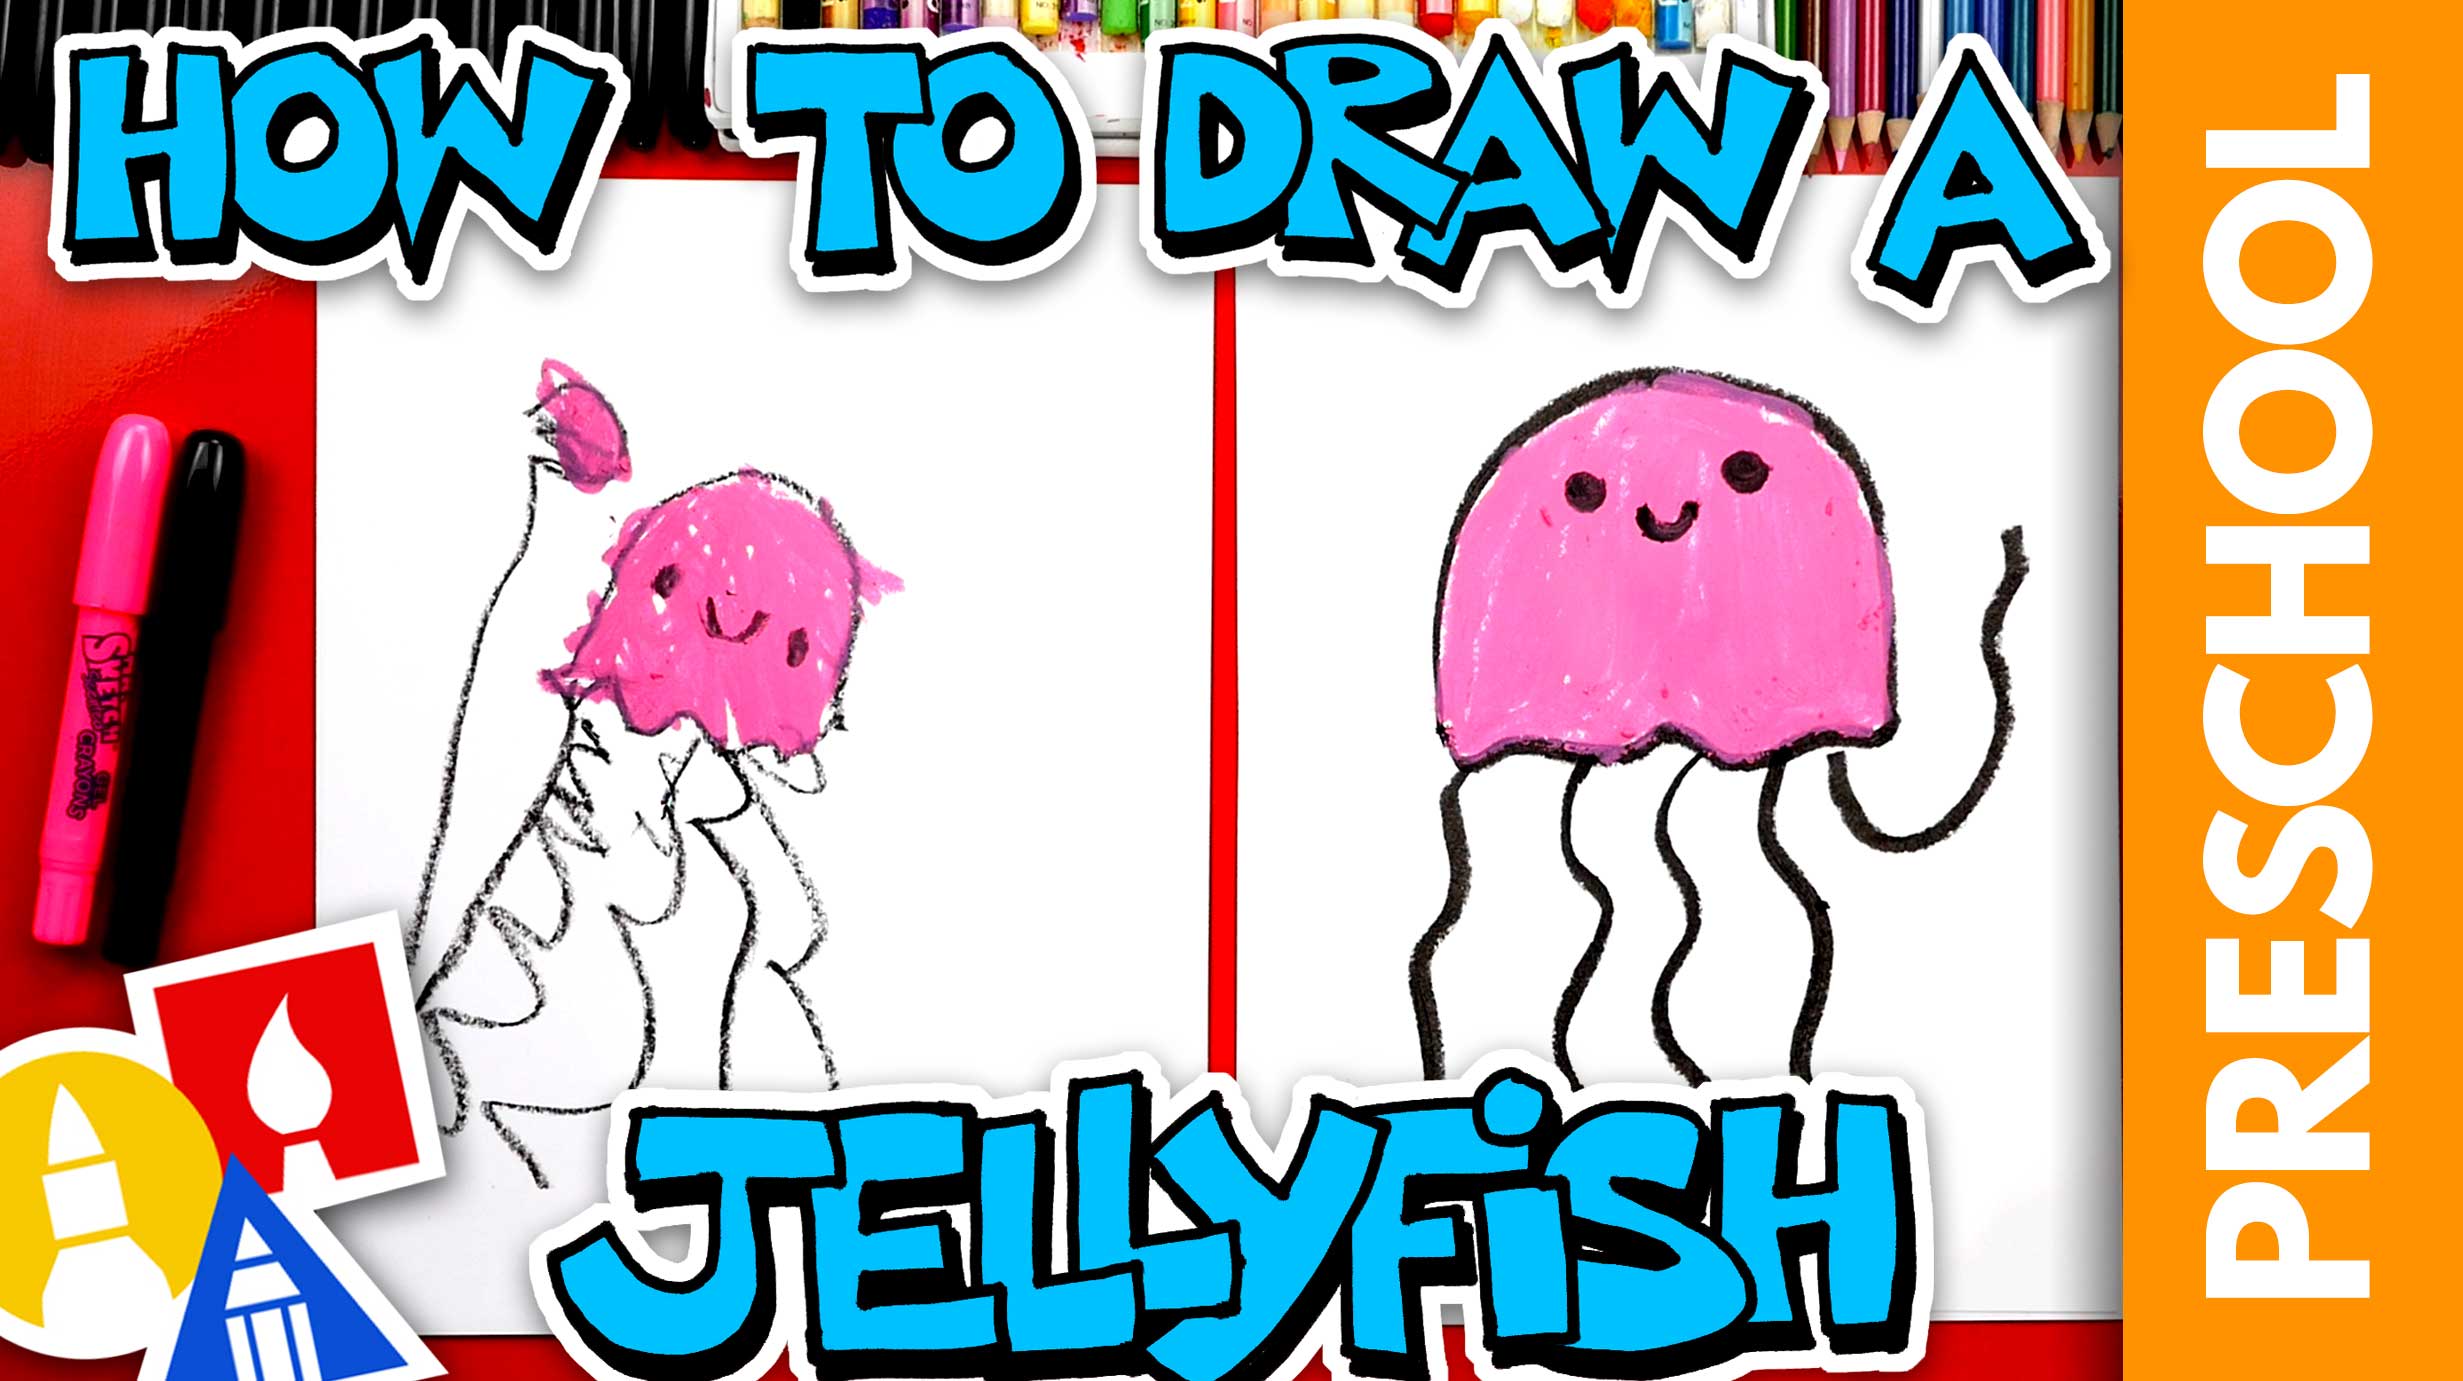 https://artforkidshub.com/wp-content/uploads/2021/06/How-To-Draw-A-Jellyfish-preschool-thumbnail.jpg